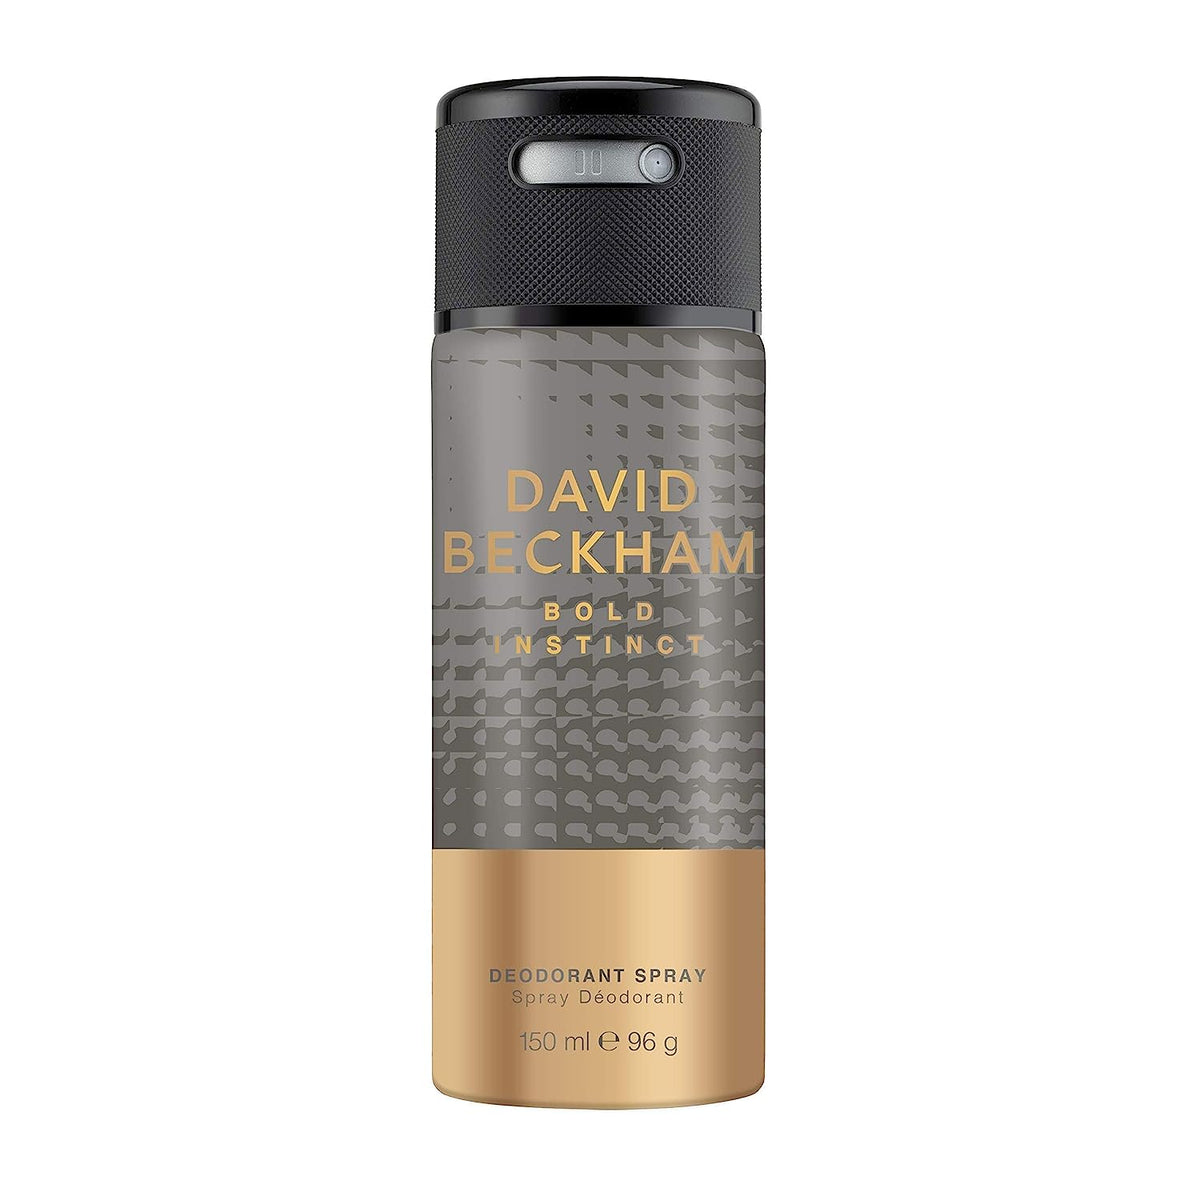 David Beckham Bold Instinct Deodorant Spray (150 ml) Beautiful